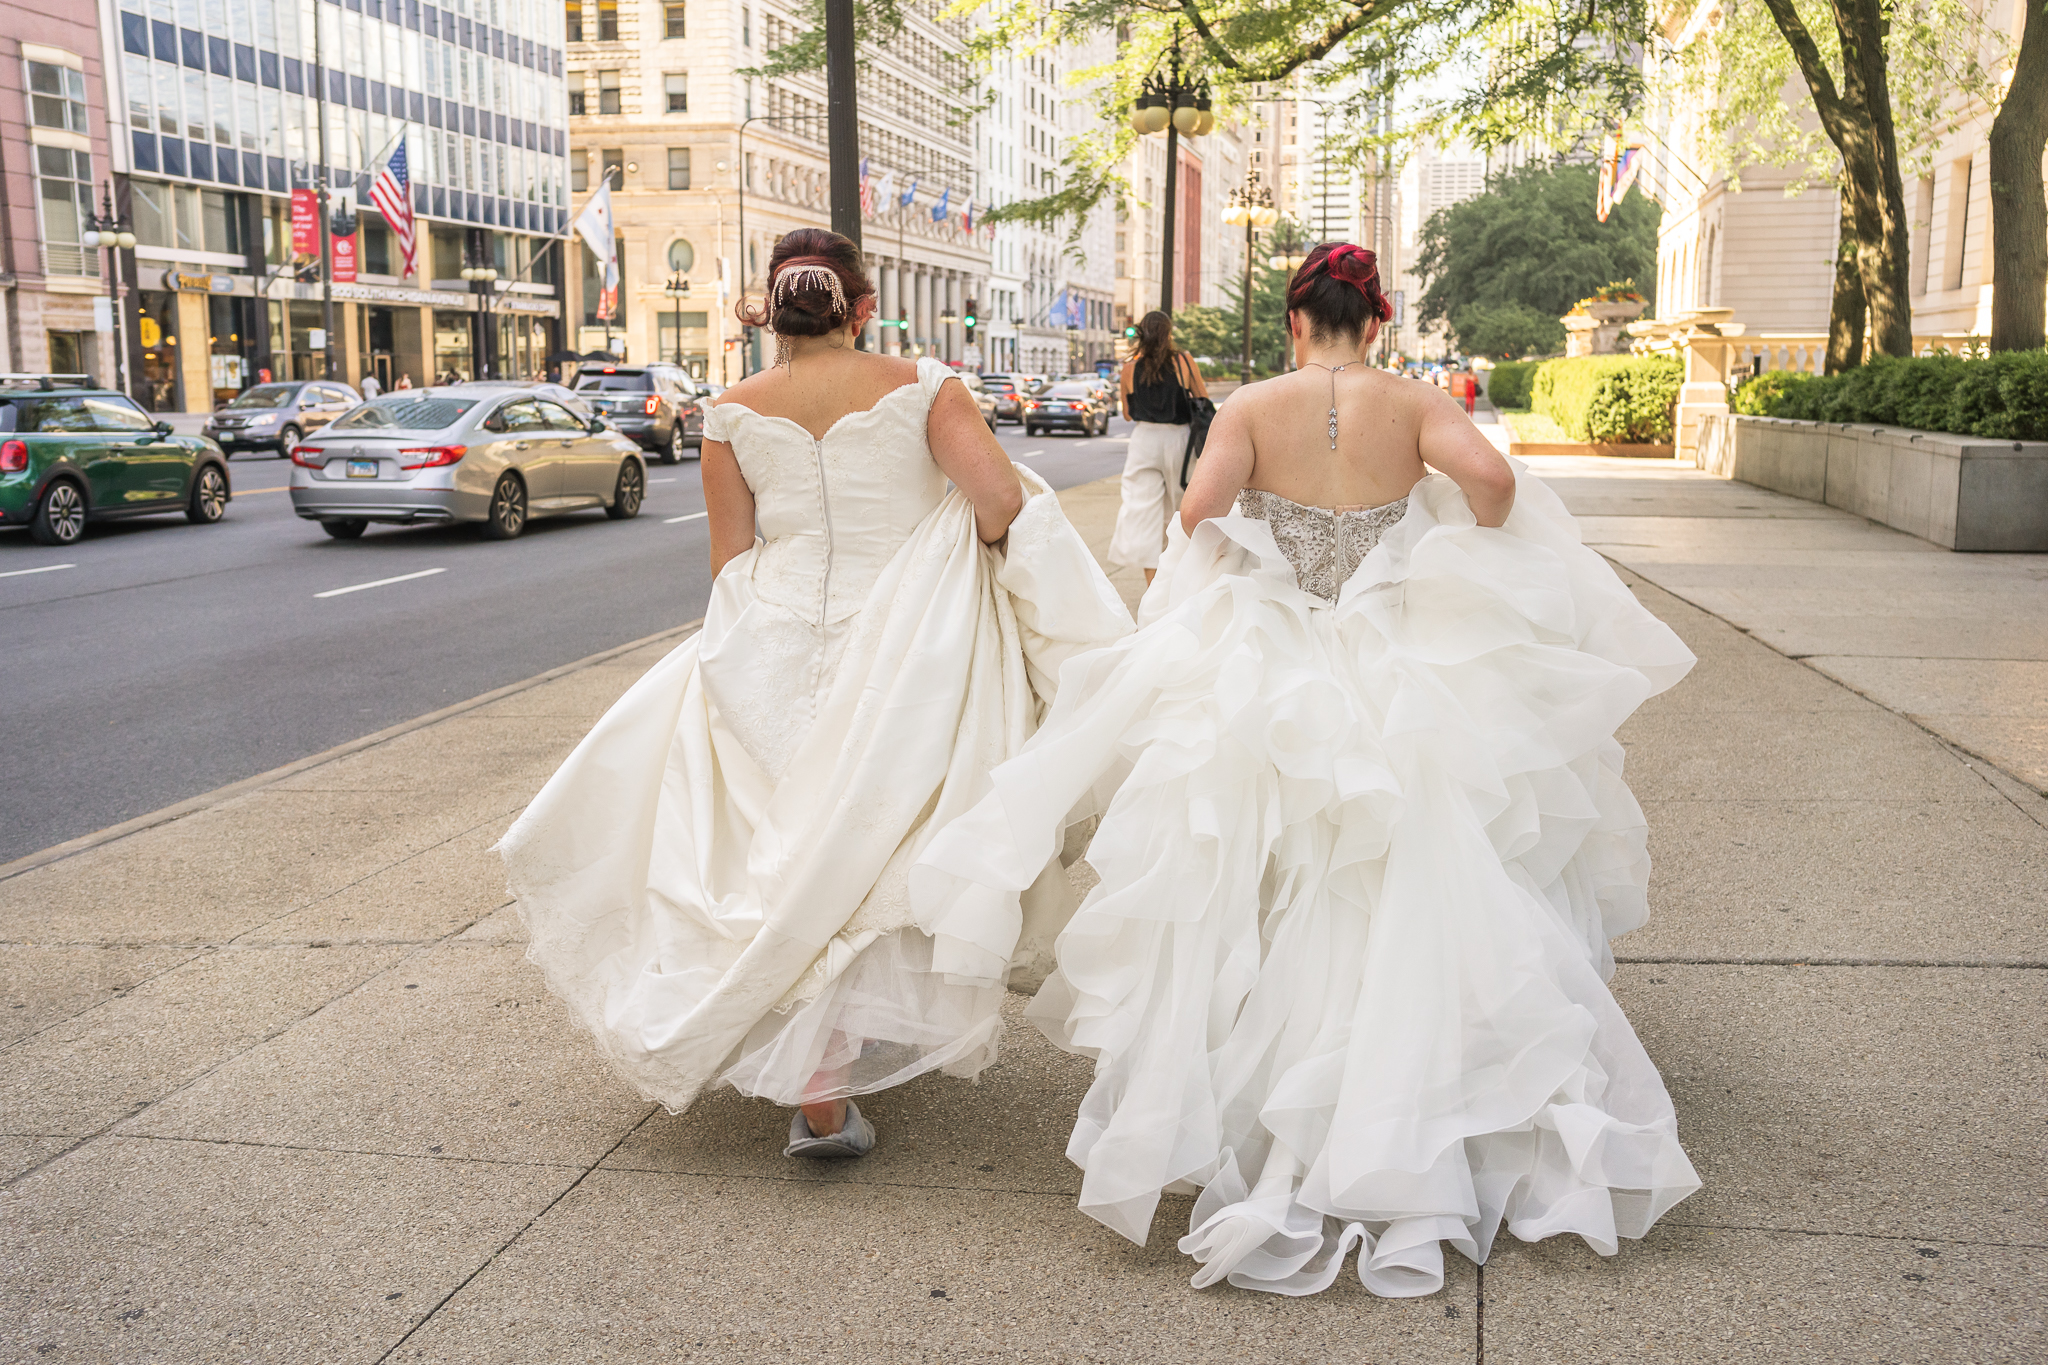 brides walking down the sidewalk in downtown chicago